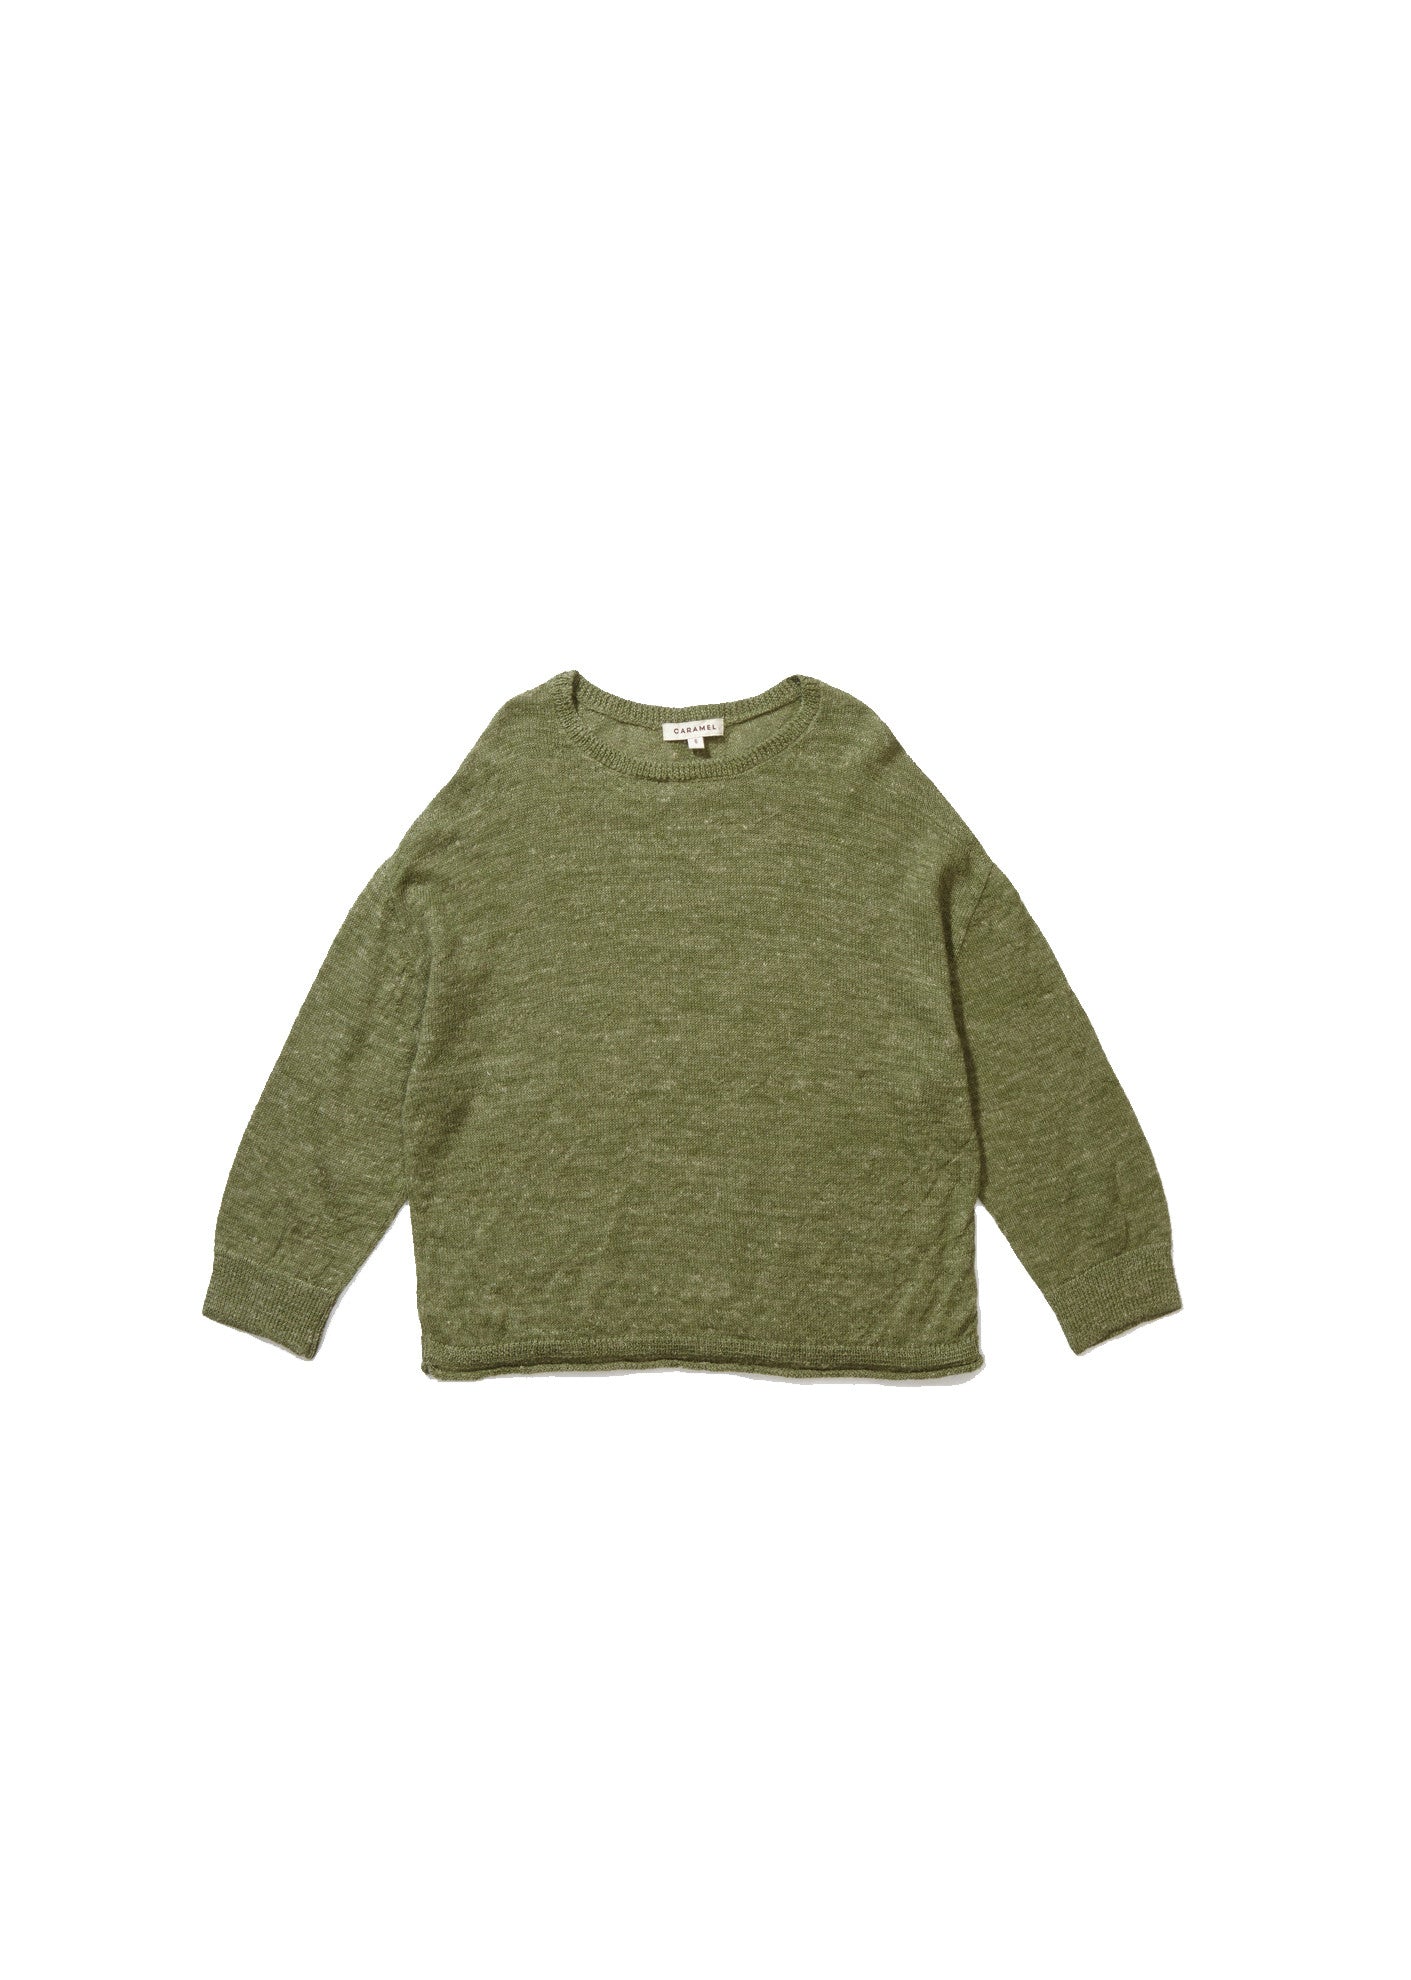 Boys Dark Green Knitted Sweater